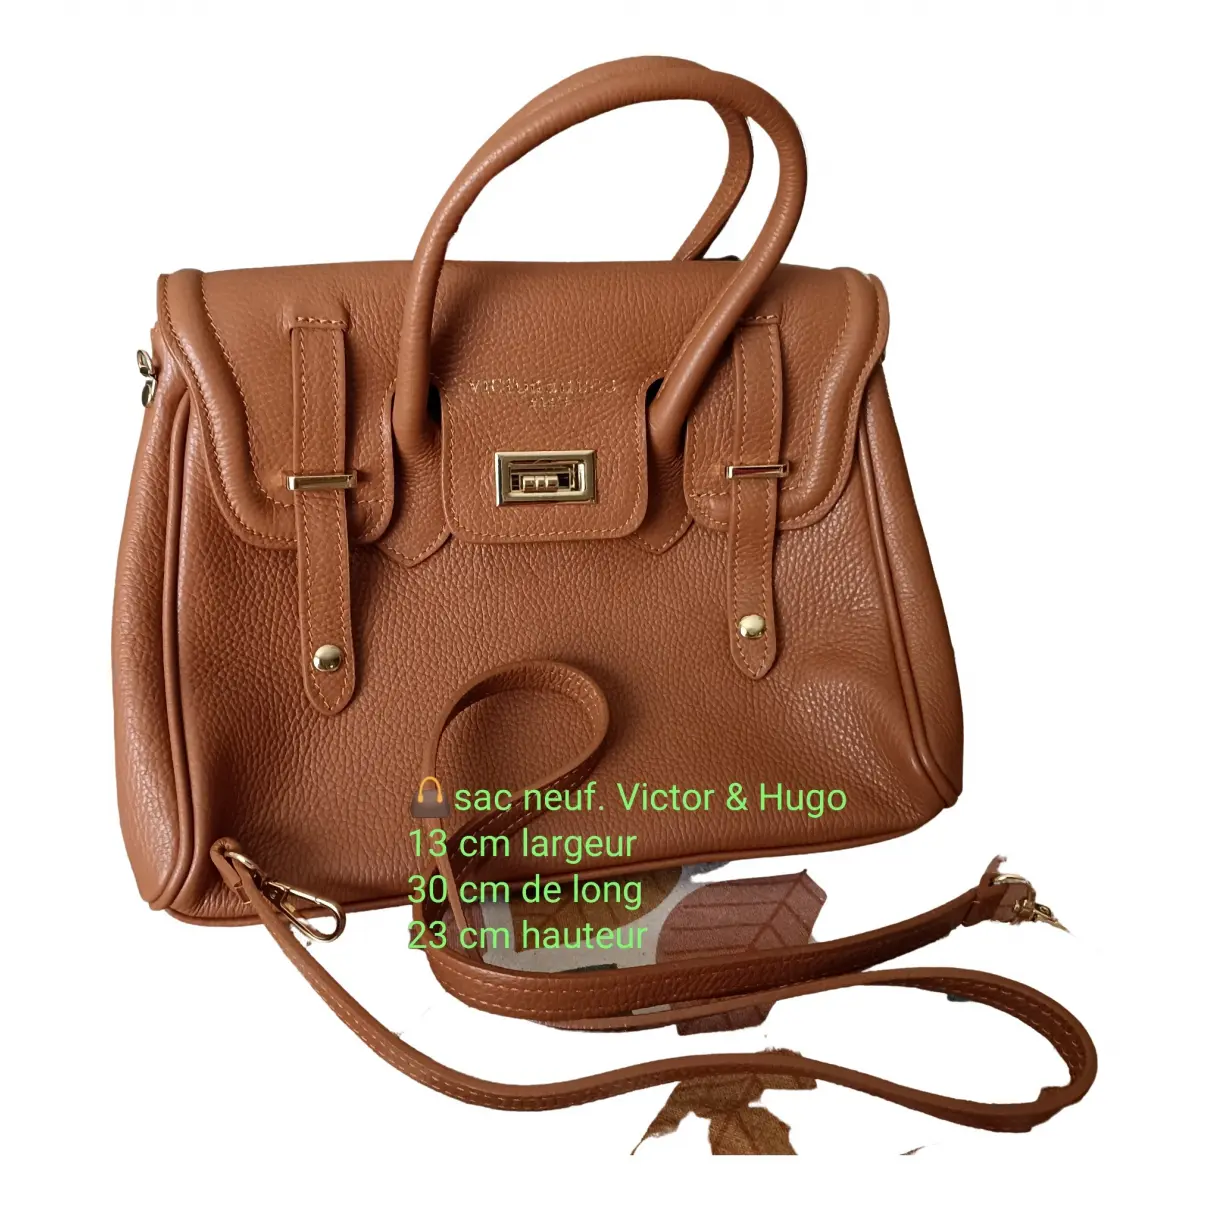 Buy Victor & Hugo Leather handbag online